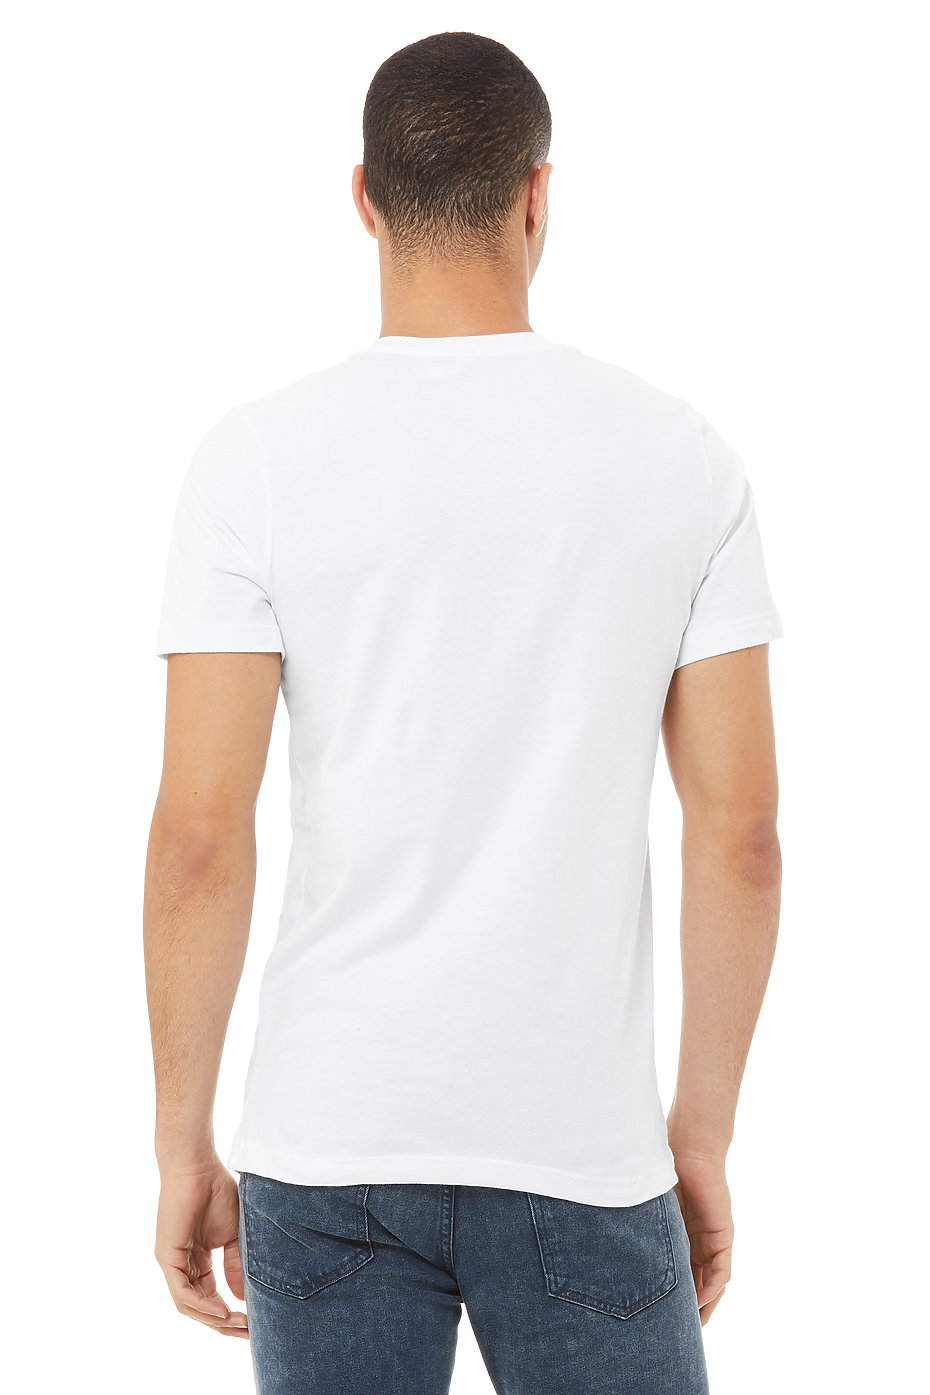 Mens Pocket Tees | Wholesale Jersey T Shirts | Bulk, Plain Blank T